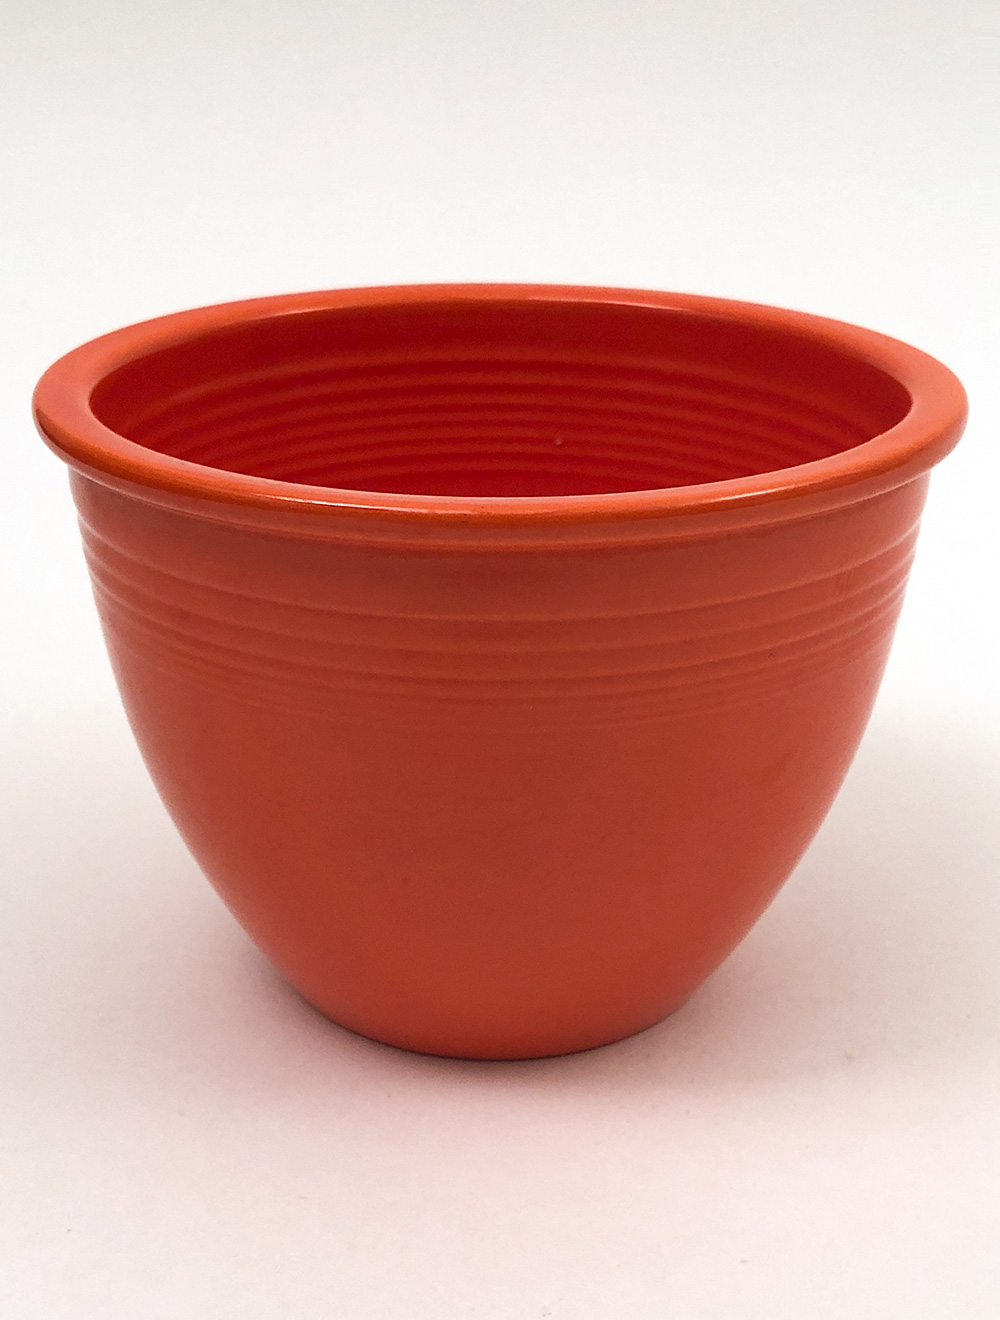 Number 1 red vintage fiesta nesting bowl